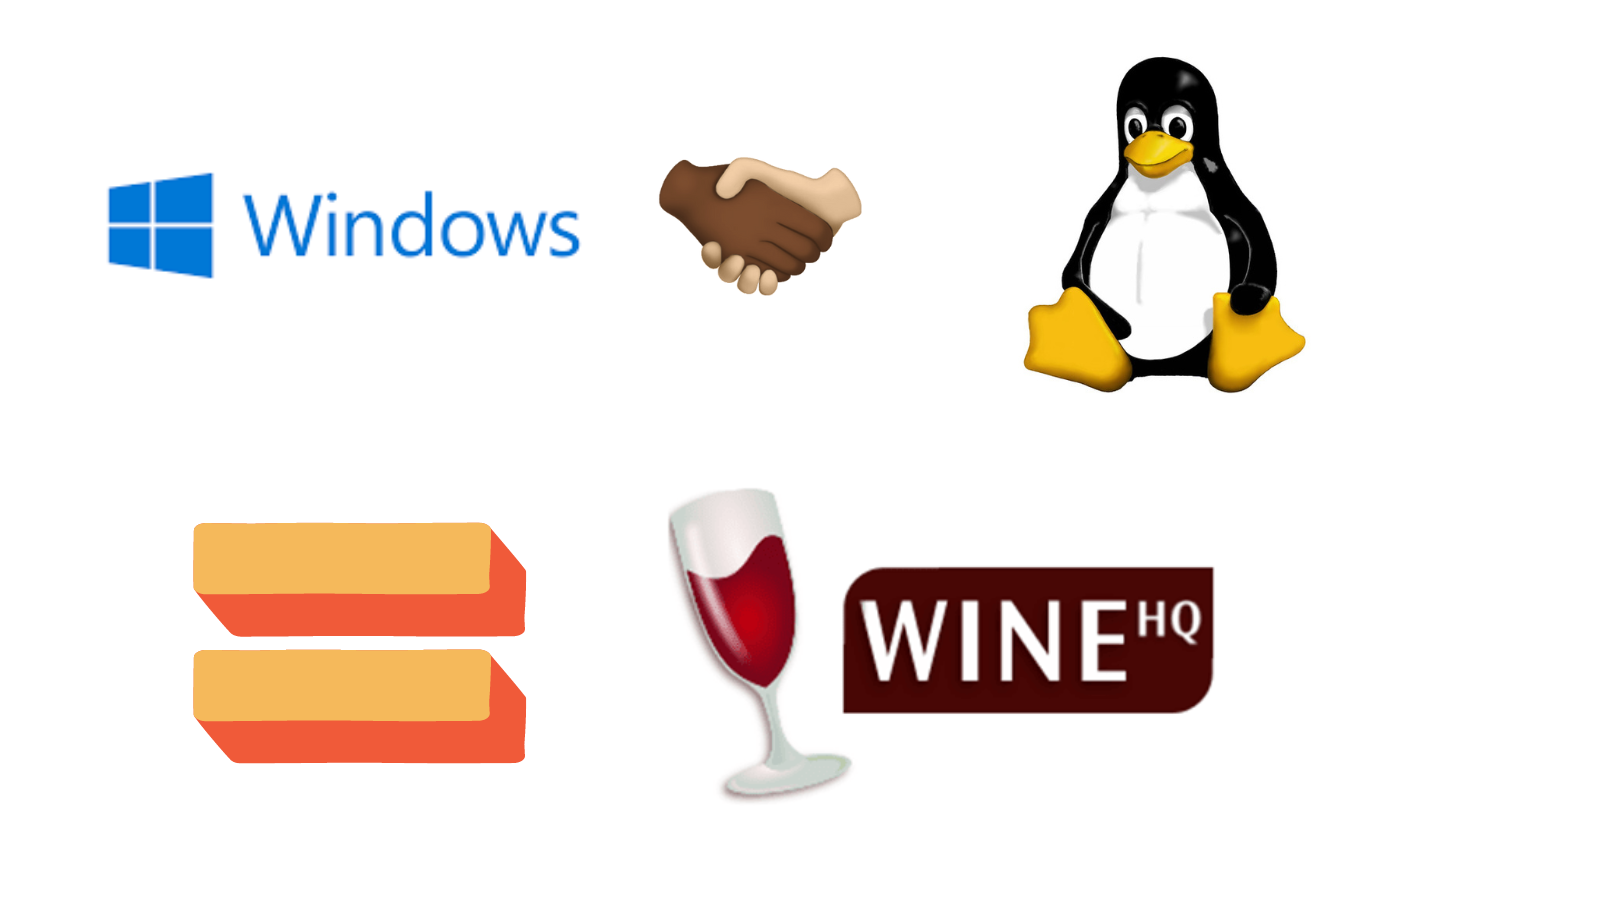 Running Windows Steam on Linux (Using Wine) - Ask Ubuntu